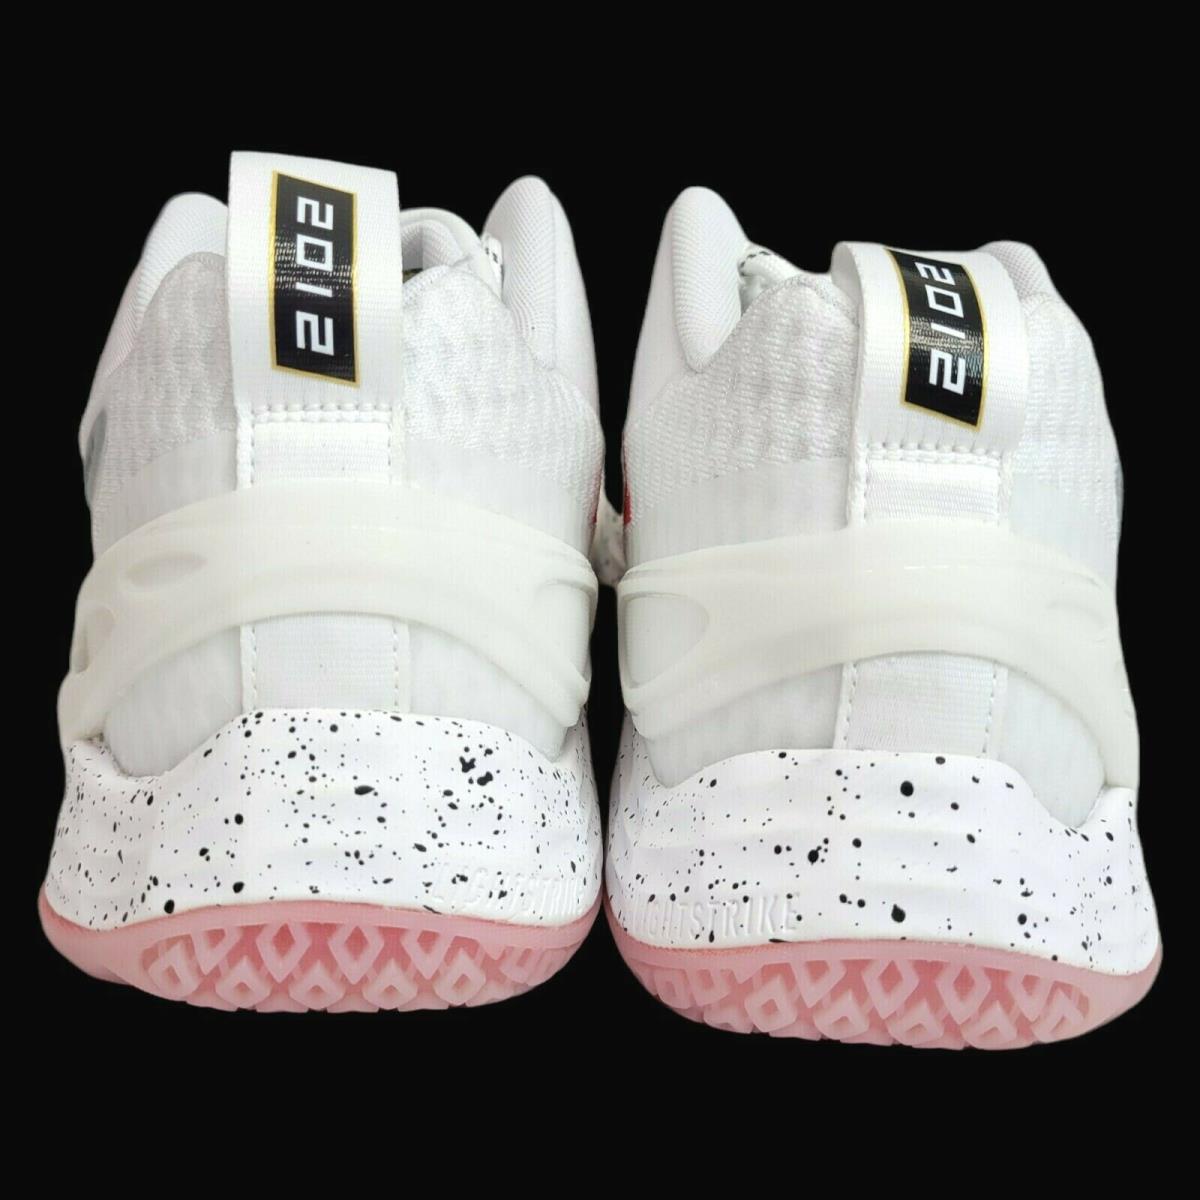 Adidas shoes  - White 4